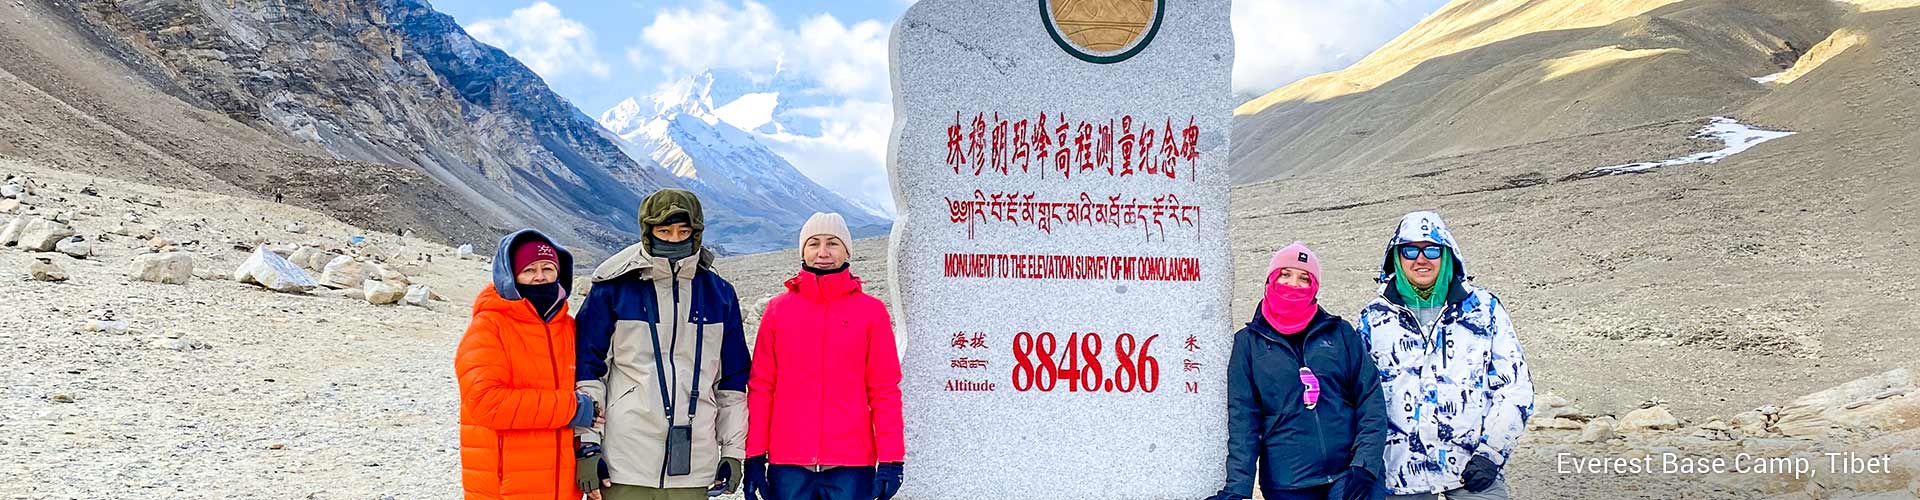 Tibet Everest Base Camp Tours